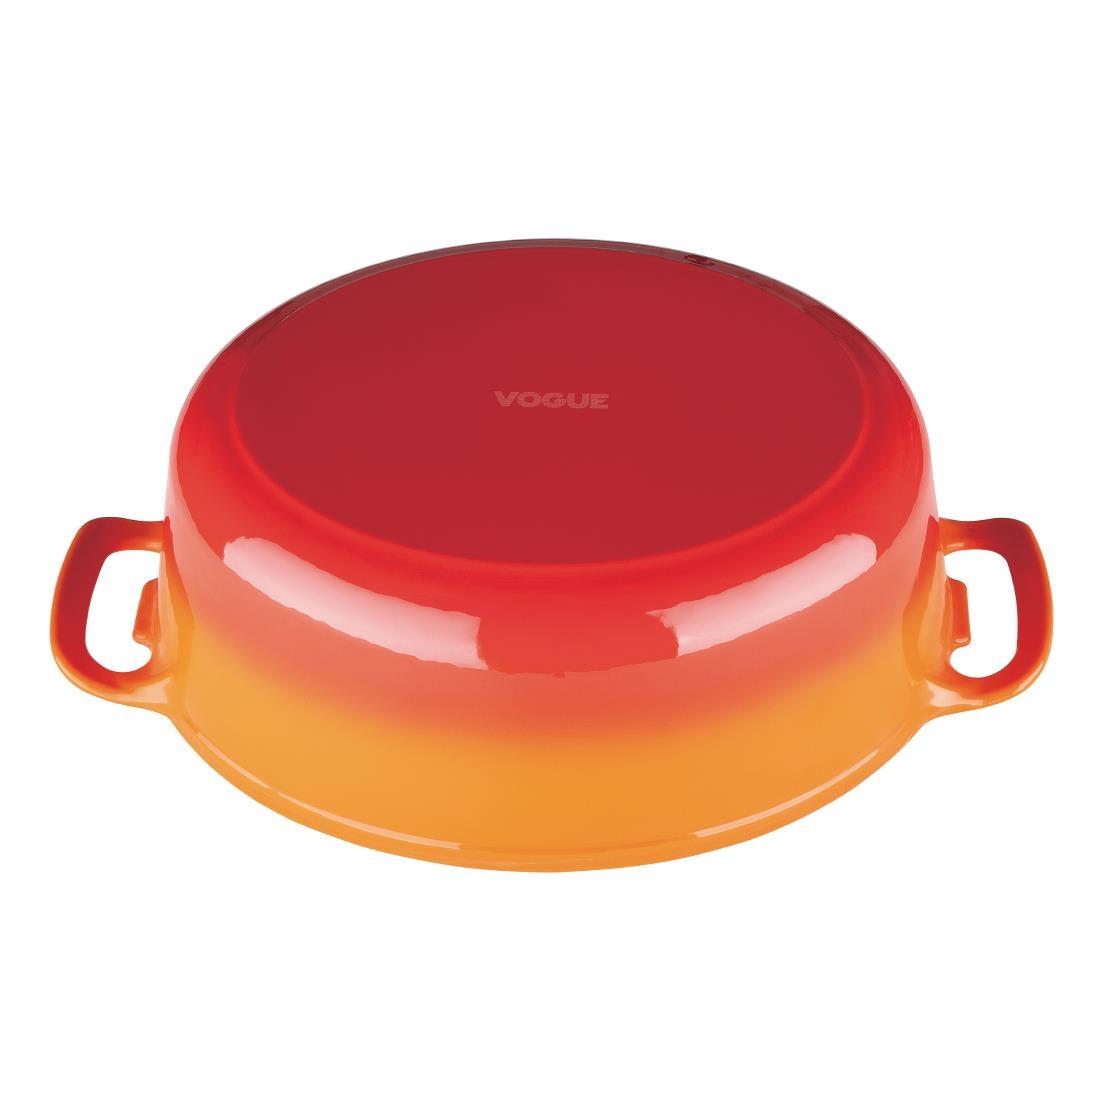 Vogue Orange Oval Casserole Dish 5Ltr - GH311  - 5